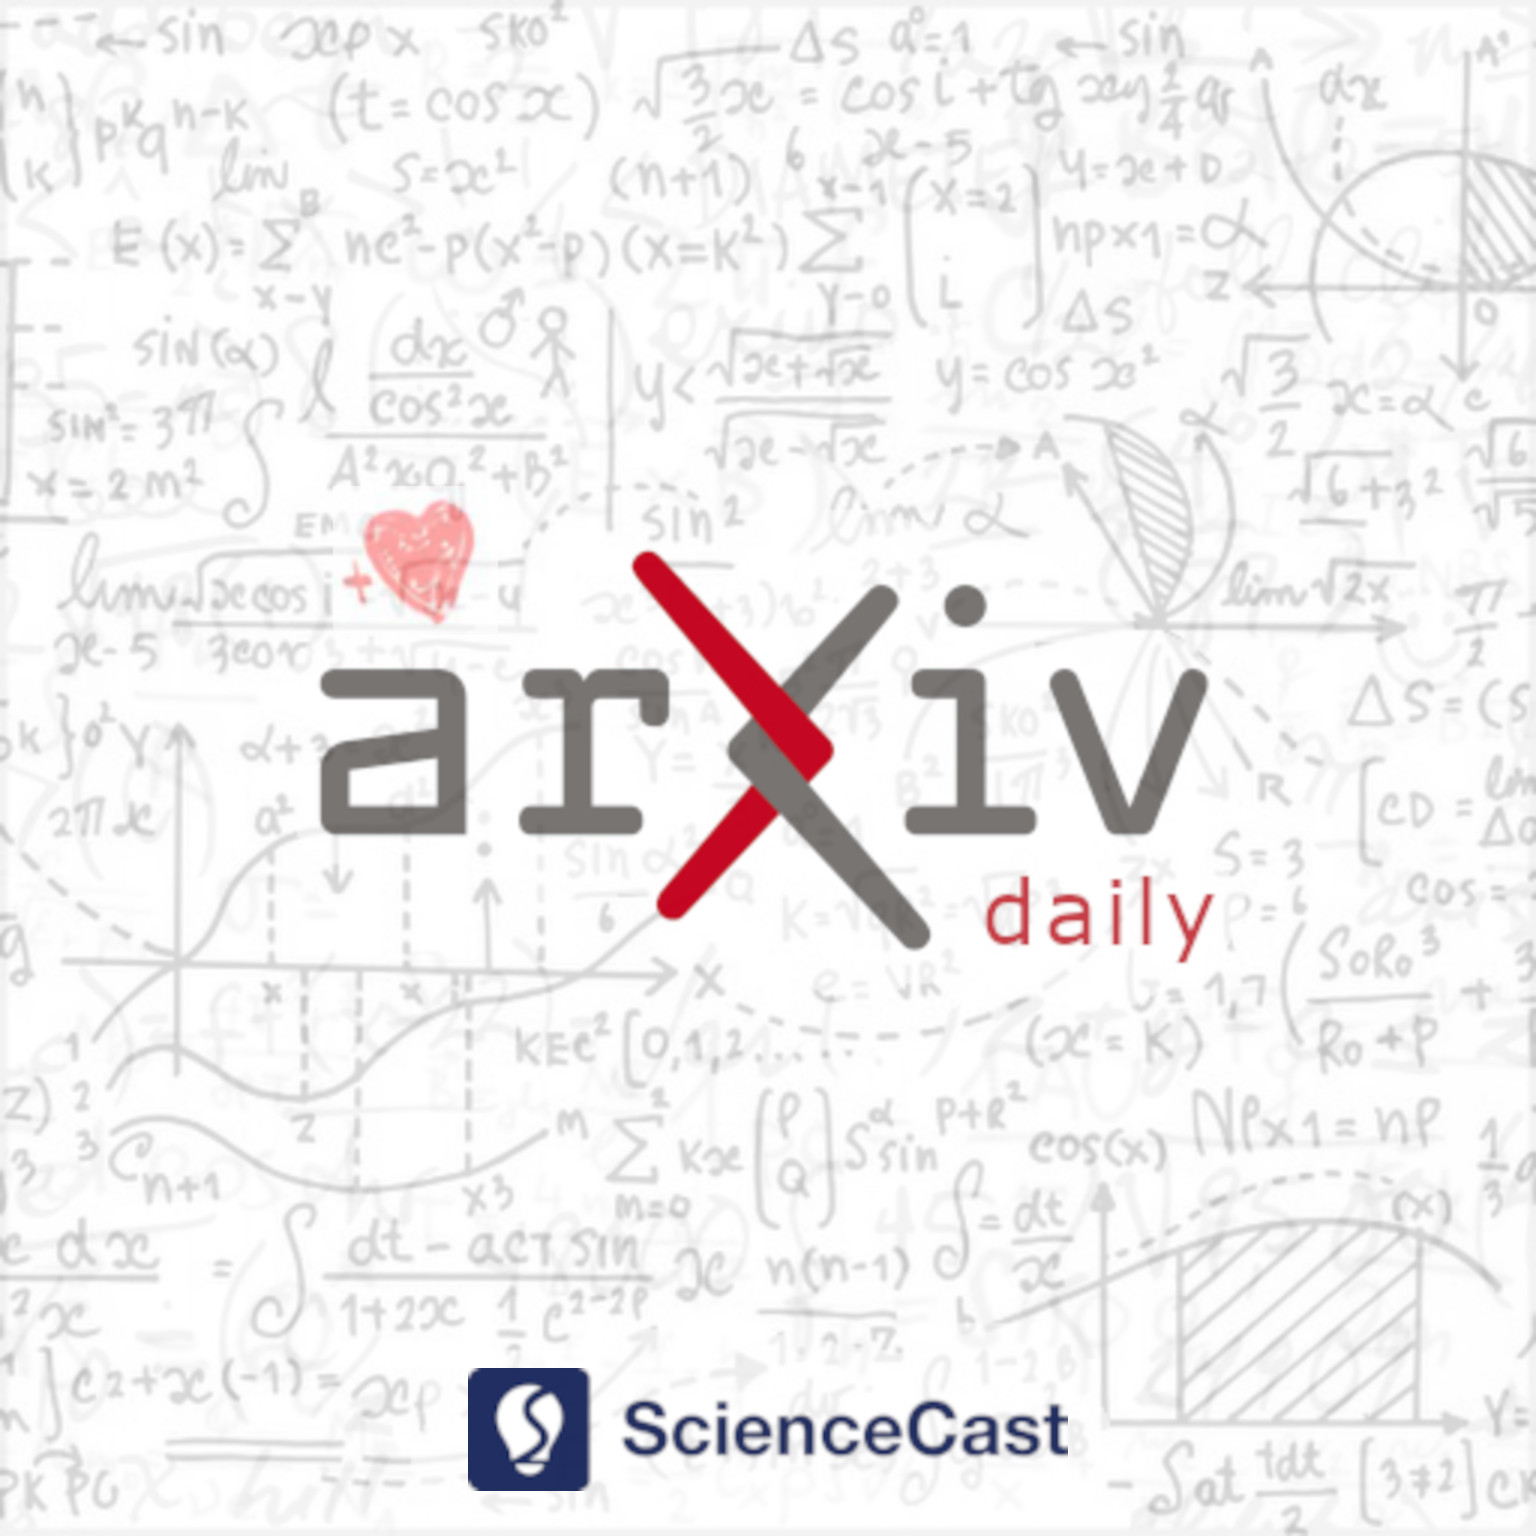 arXiv daily: General Economics